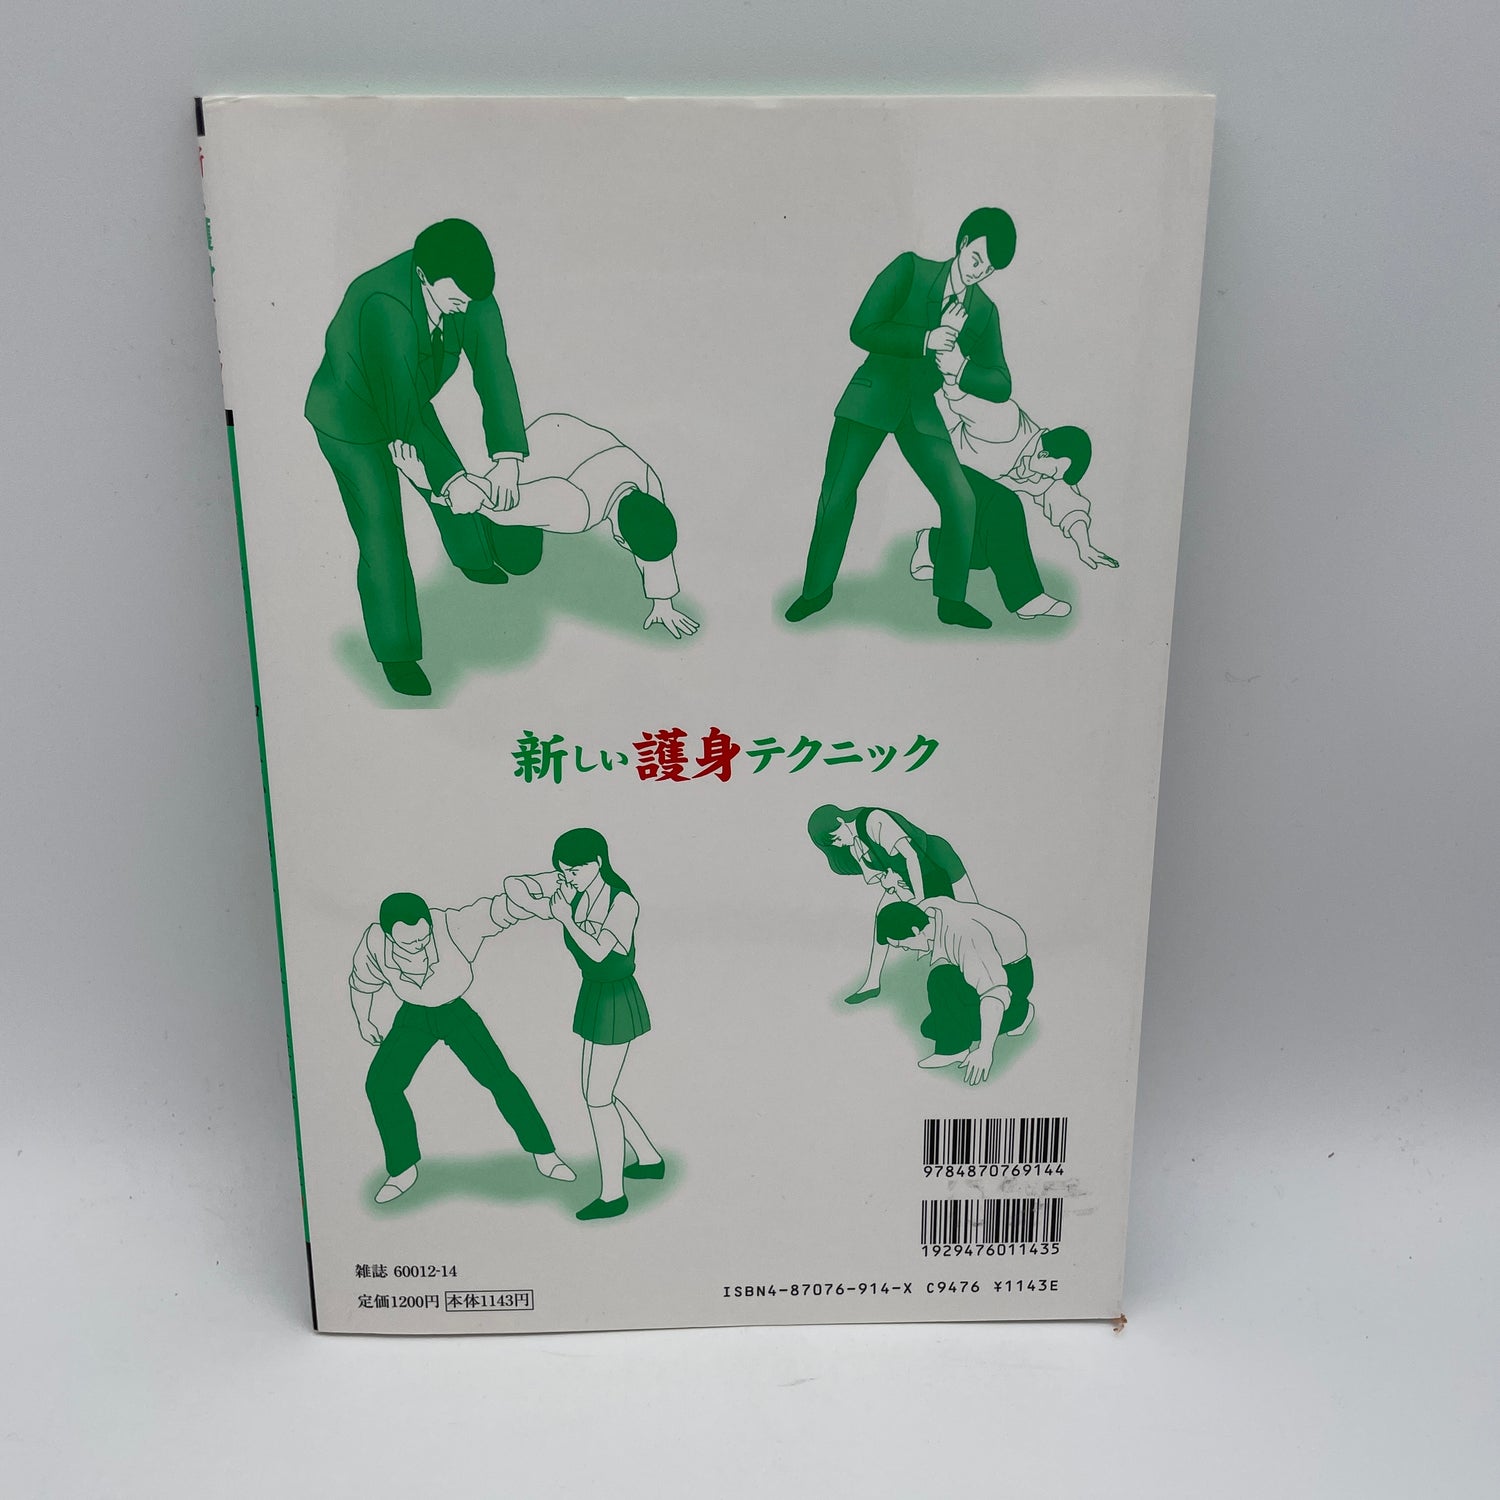 60 Self Defense Techniques from Kobujutsu Book by Fumio Sakurai (Preowned)